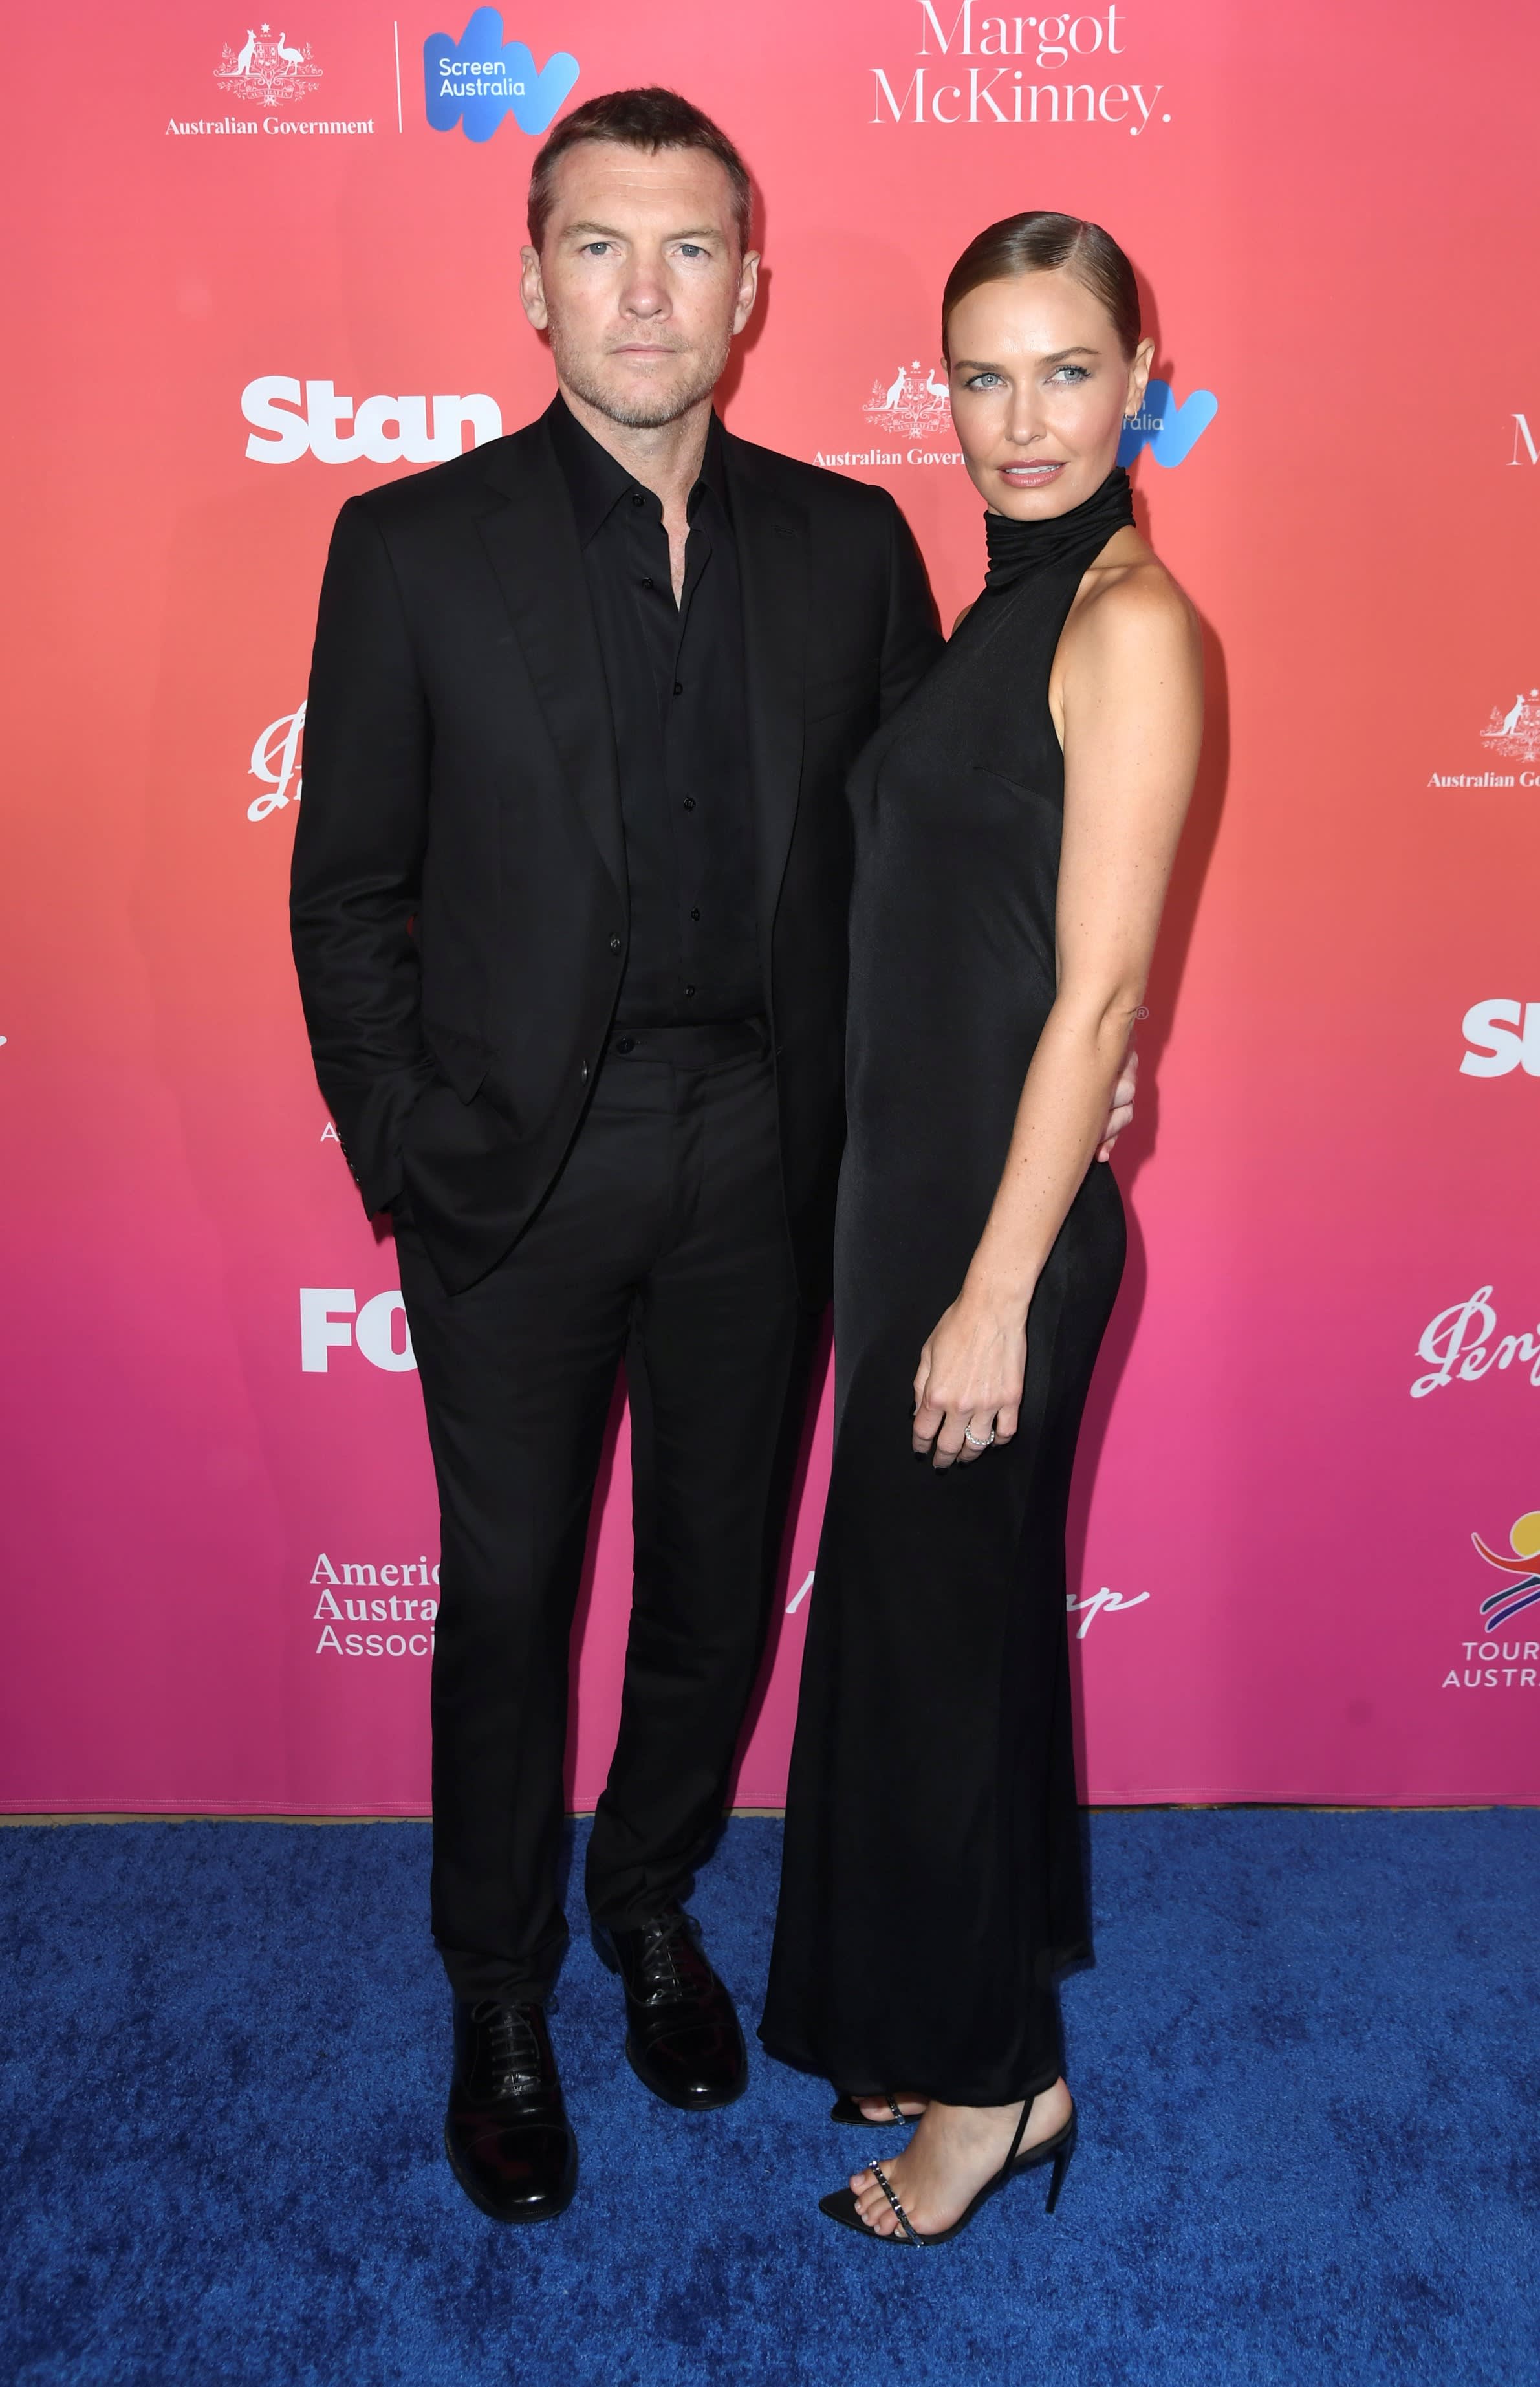 Sam Worthington, pictured with wife Lara Worthington, wearing a Brioni black suit